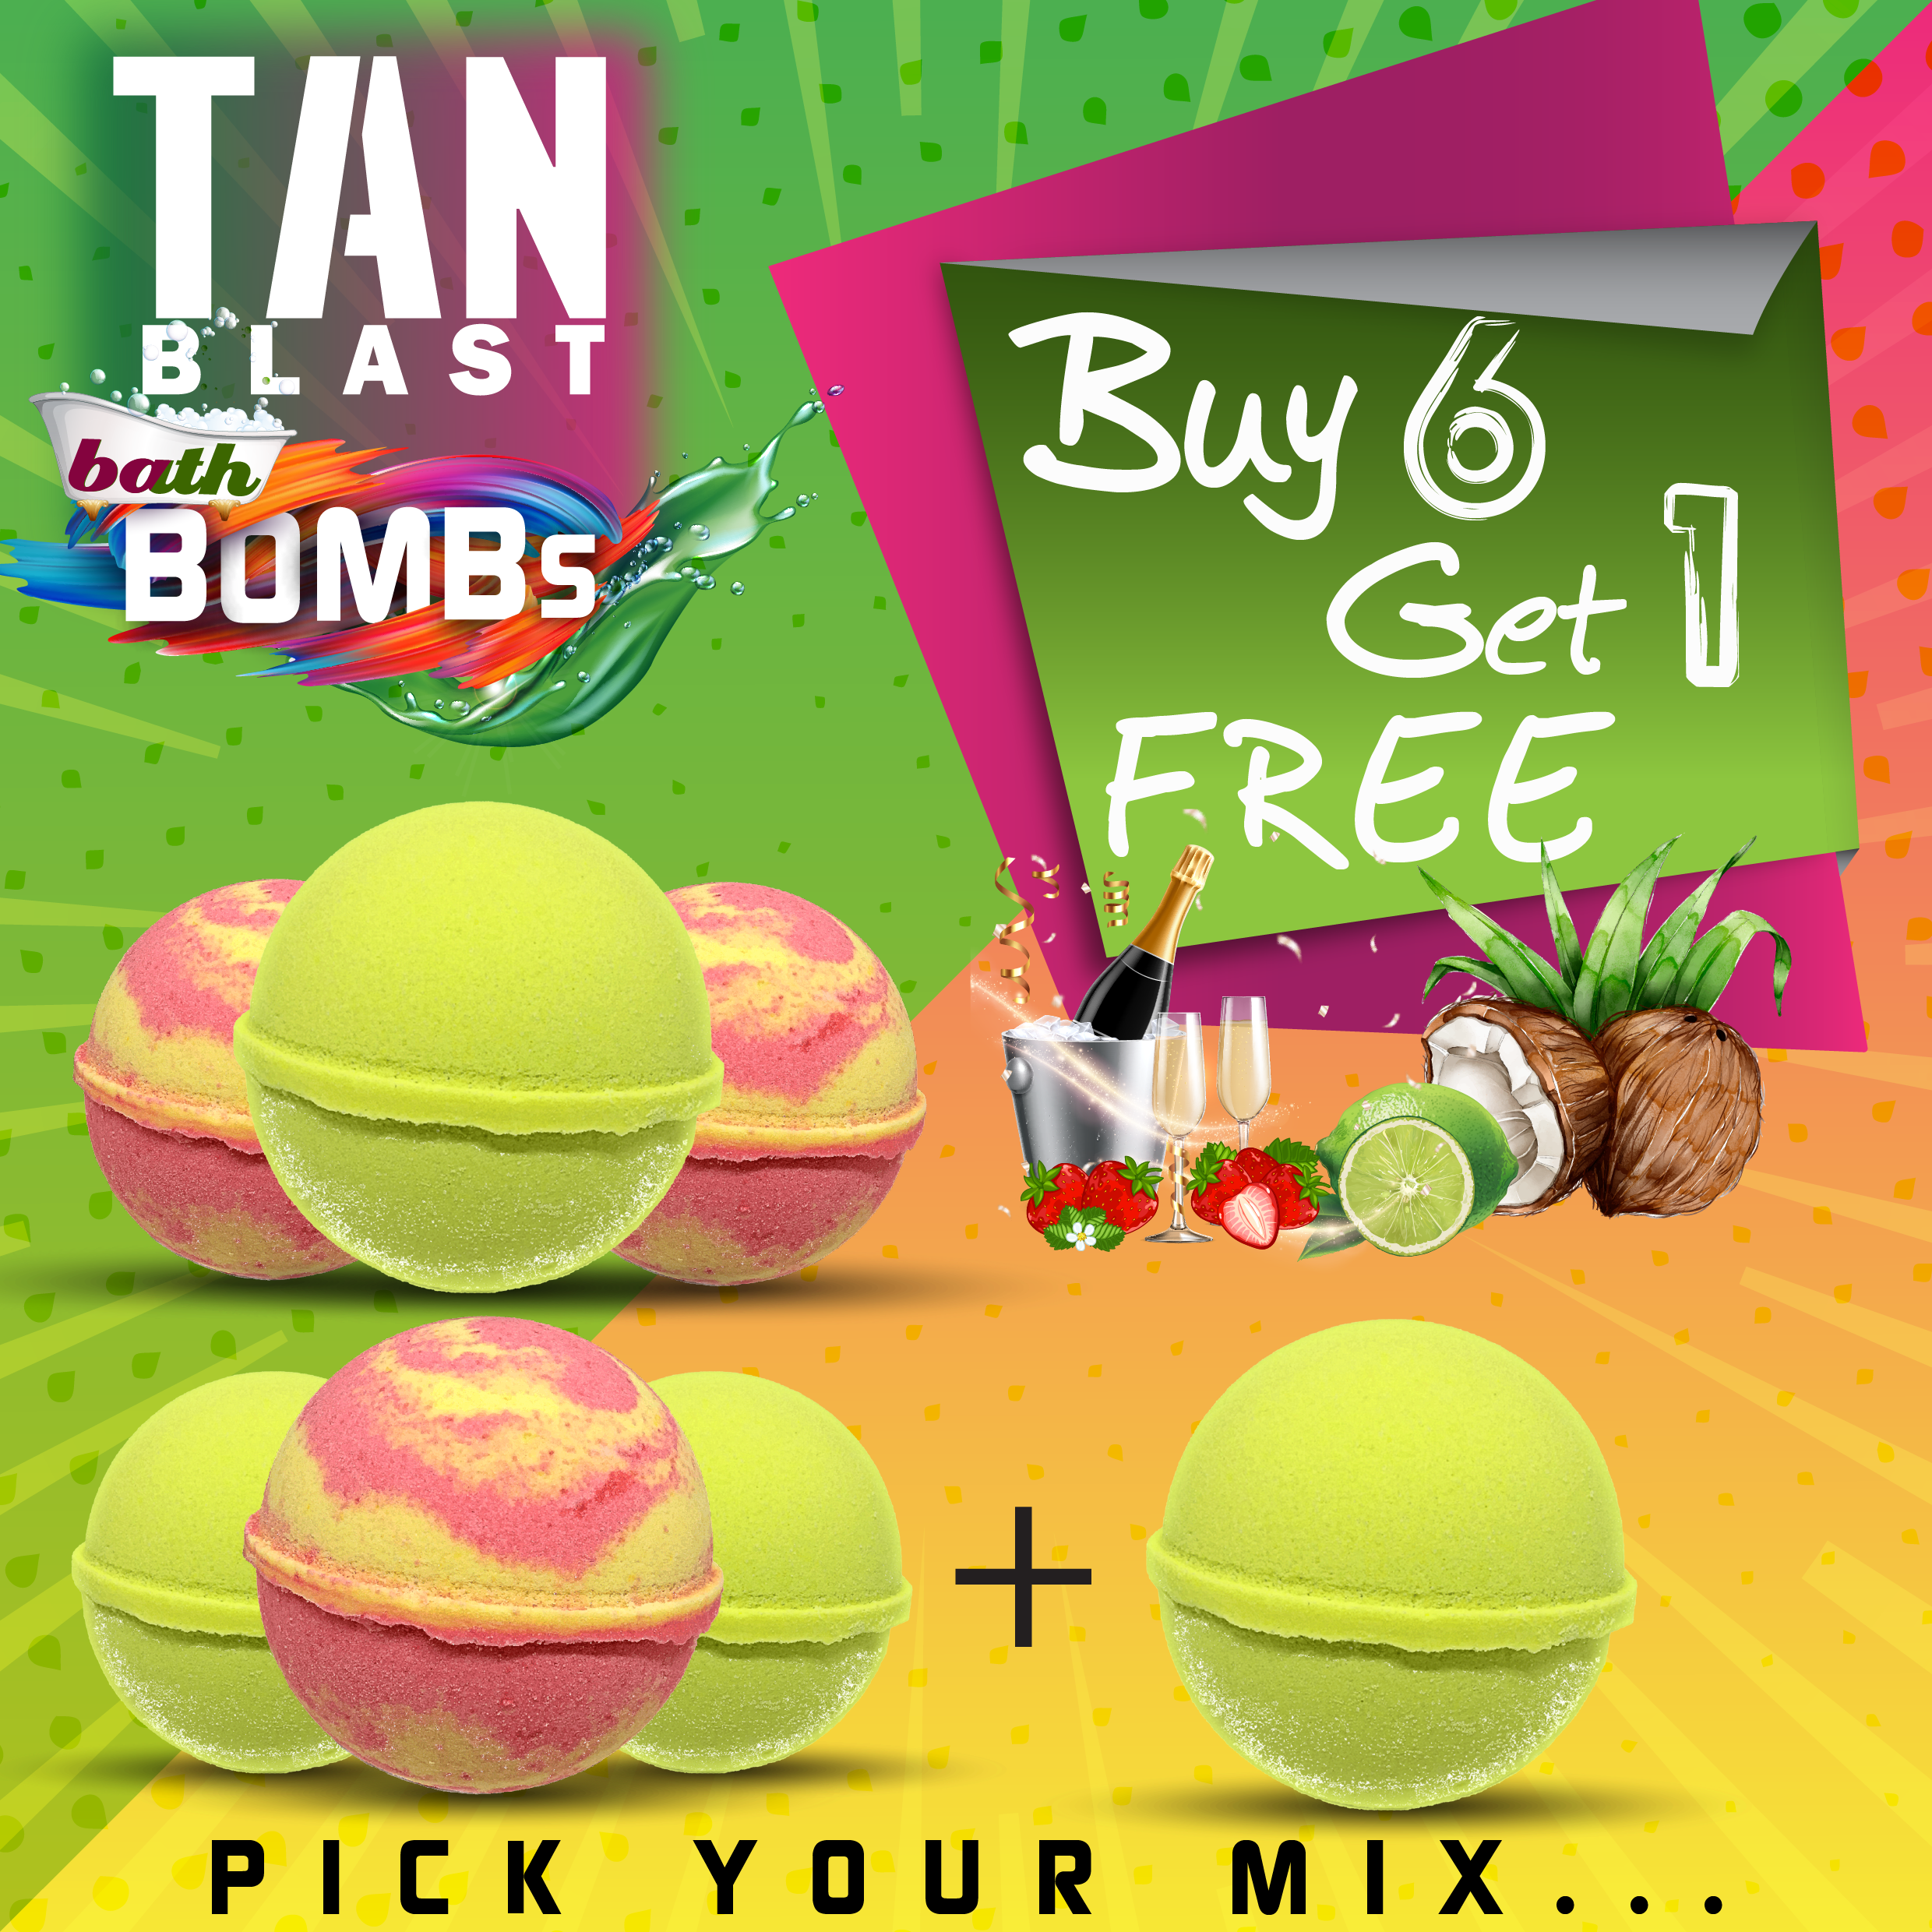 TANblast Bath Bombs - Pick your mix